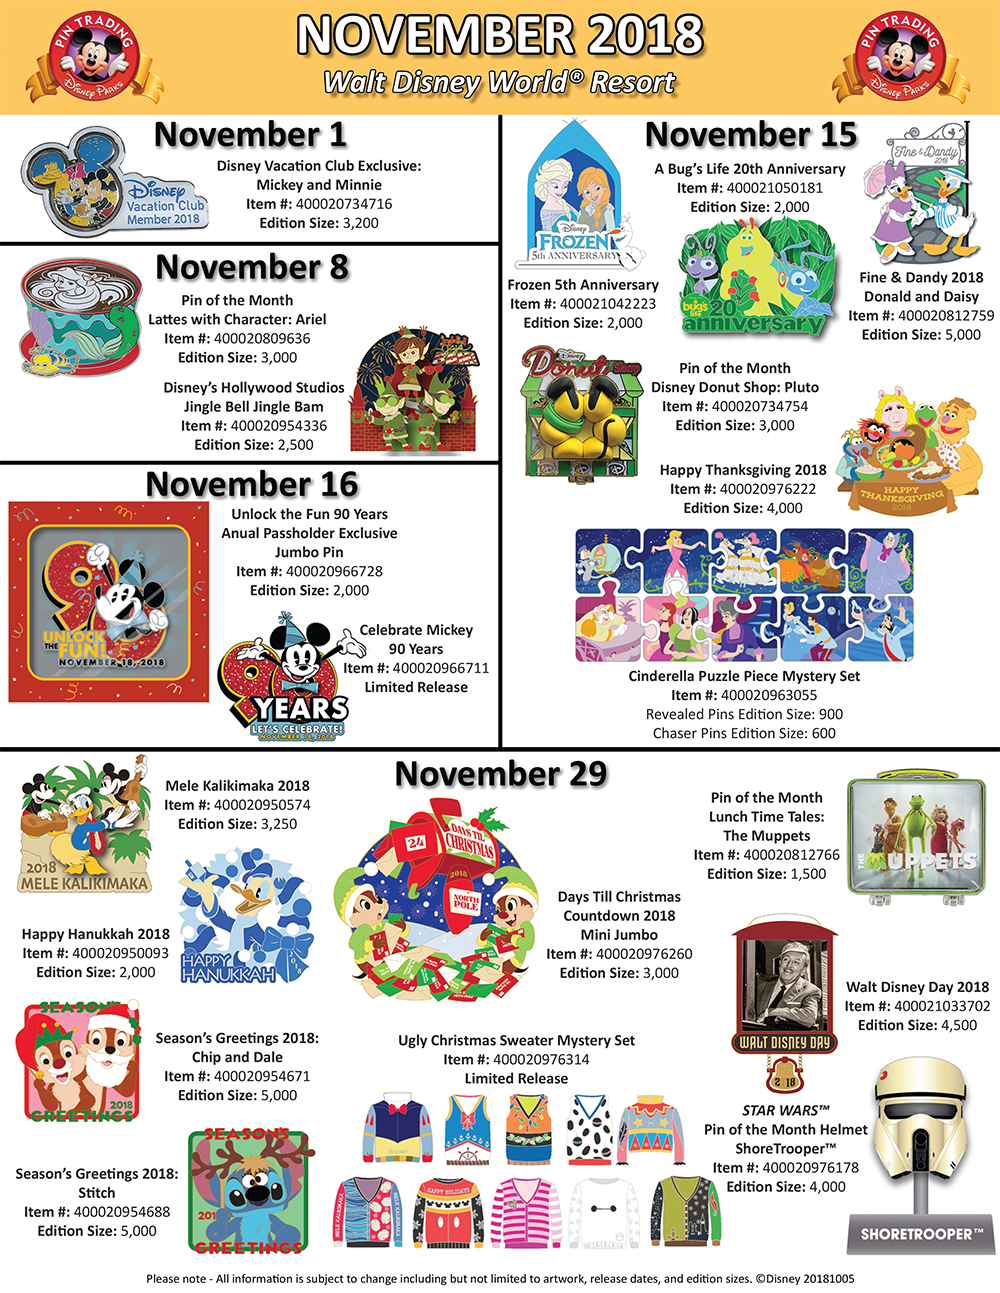 New Holiday Disney Trading Pins Revealed For November